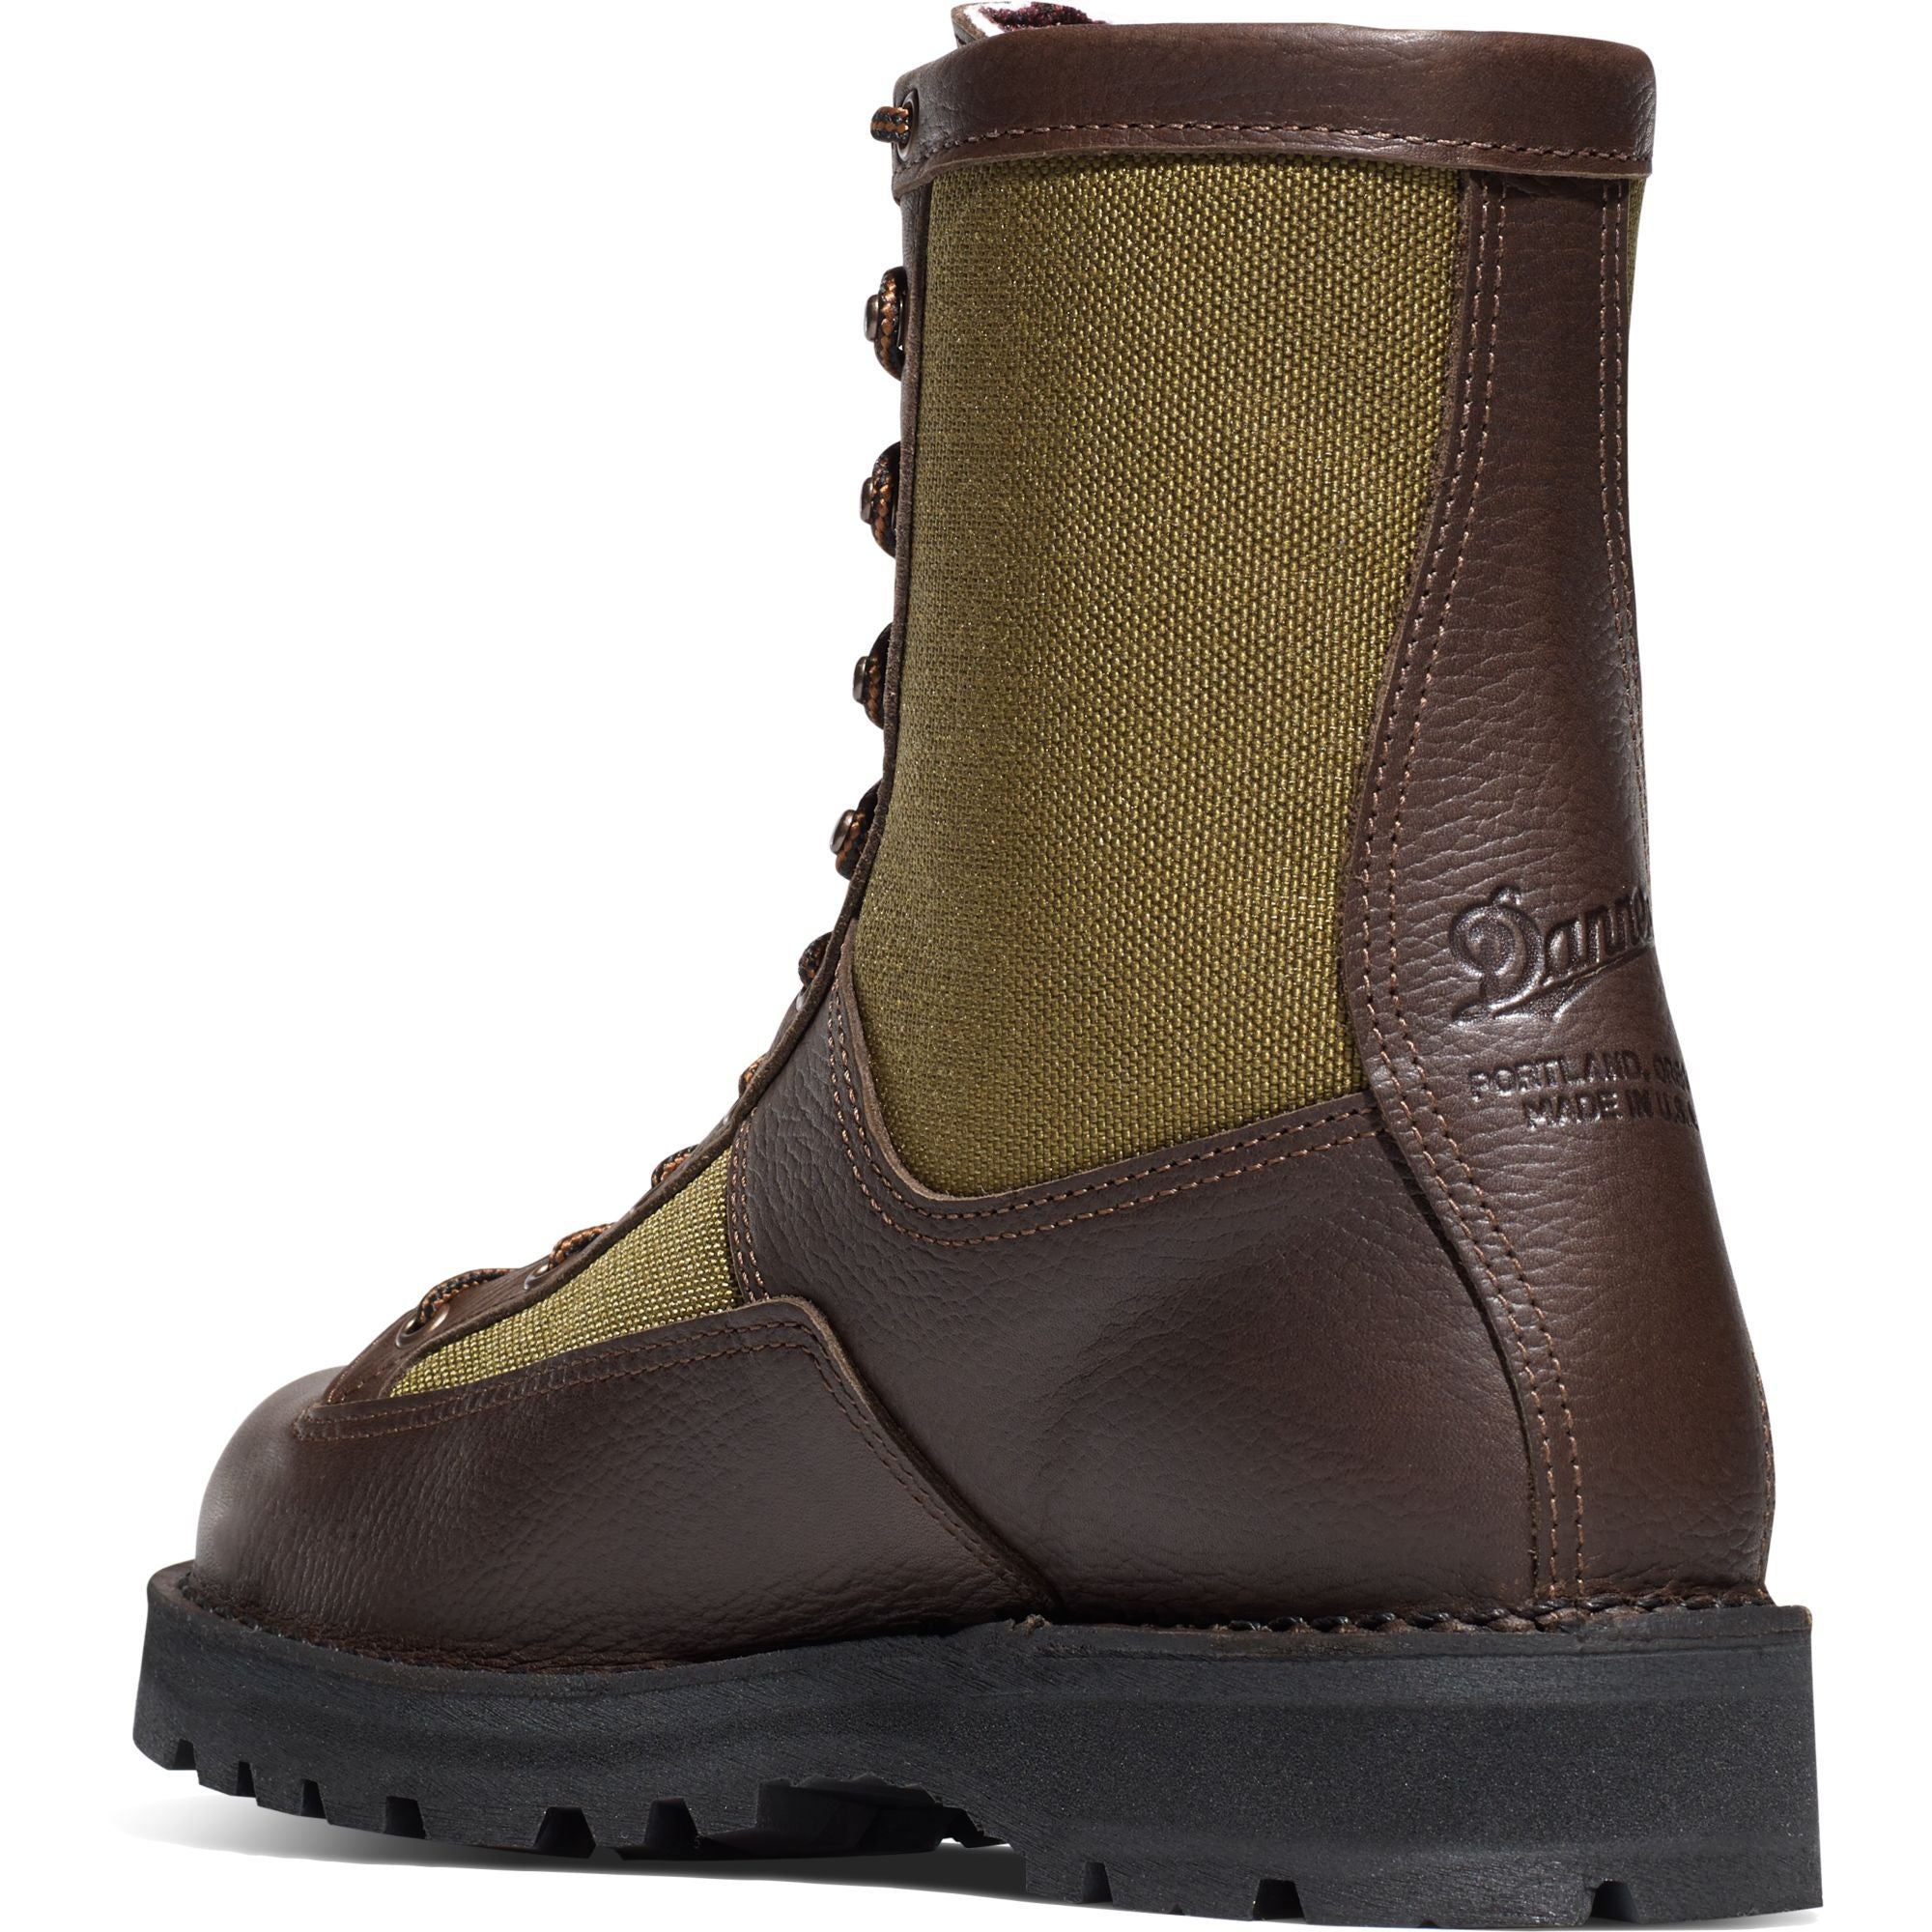 Danner Men's Sierra 8" USA Made Insulated WP Hunt Boot - Brown - 63100  - Overlook Boots